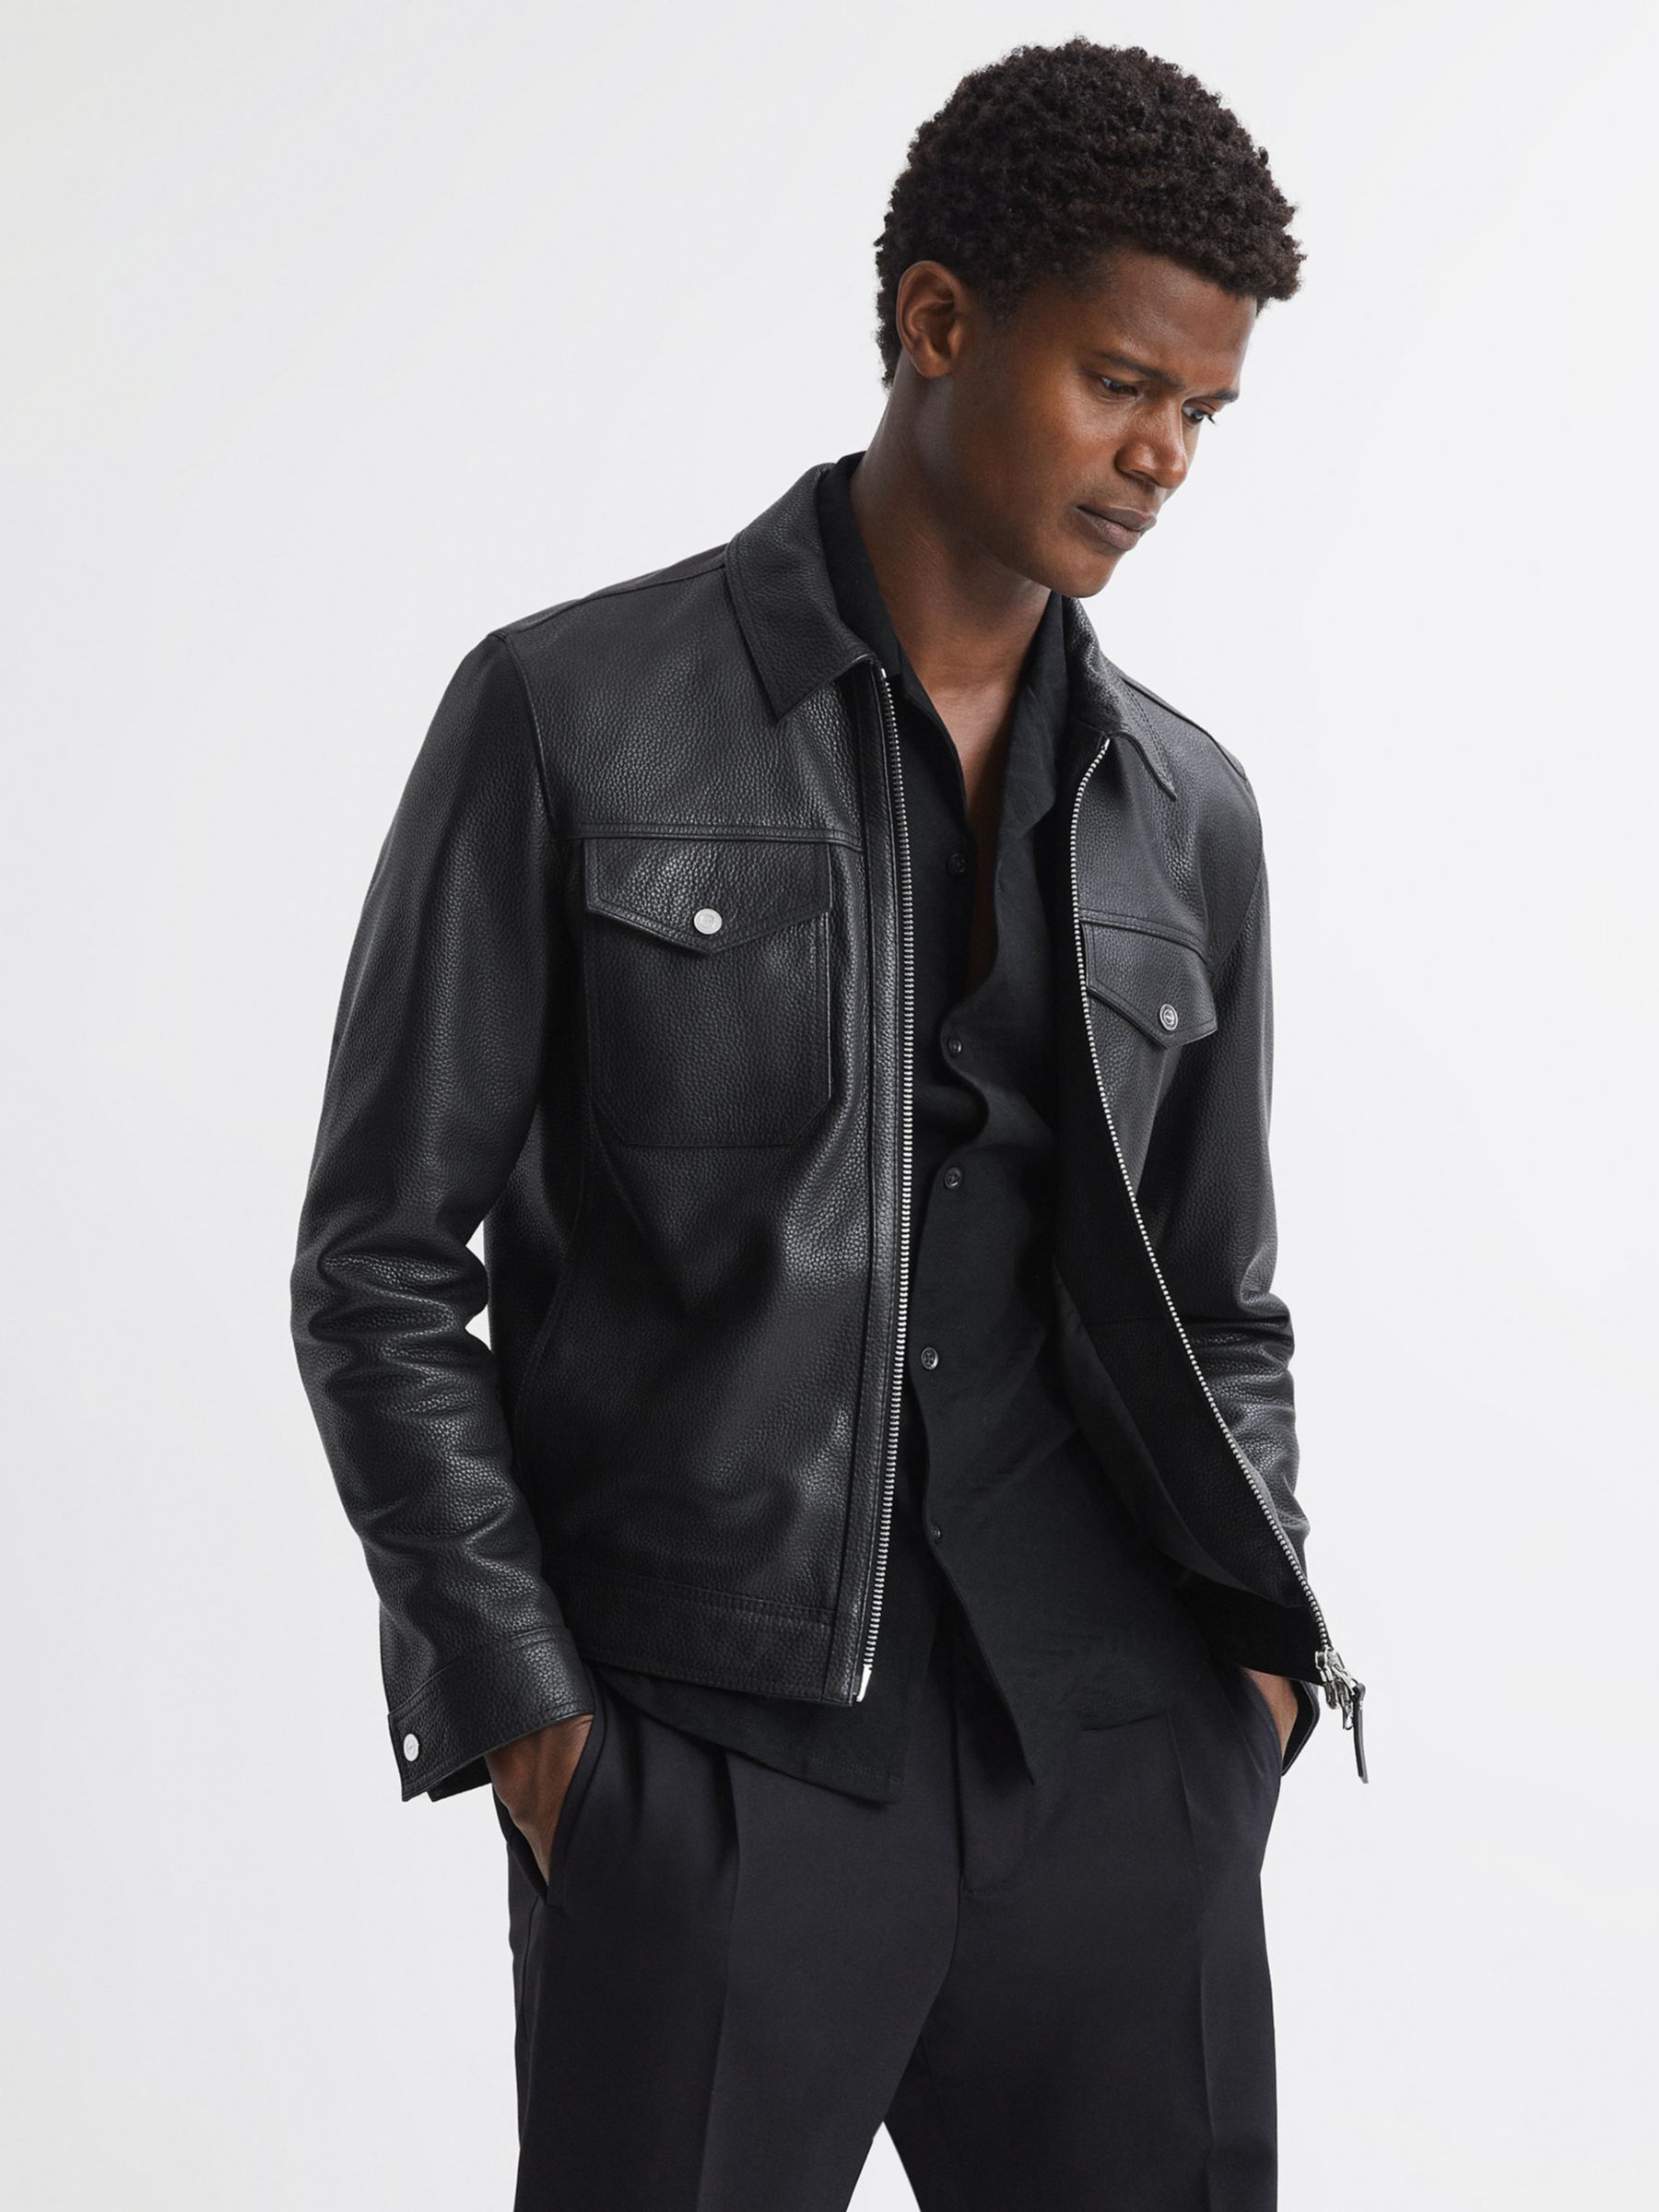 Reiss Ledger Long Sleeve Jacquard Shirt, Black at John Lewis & Partners